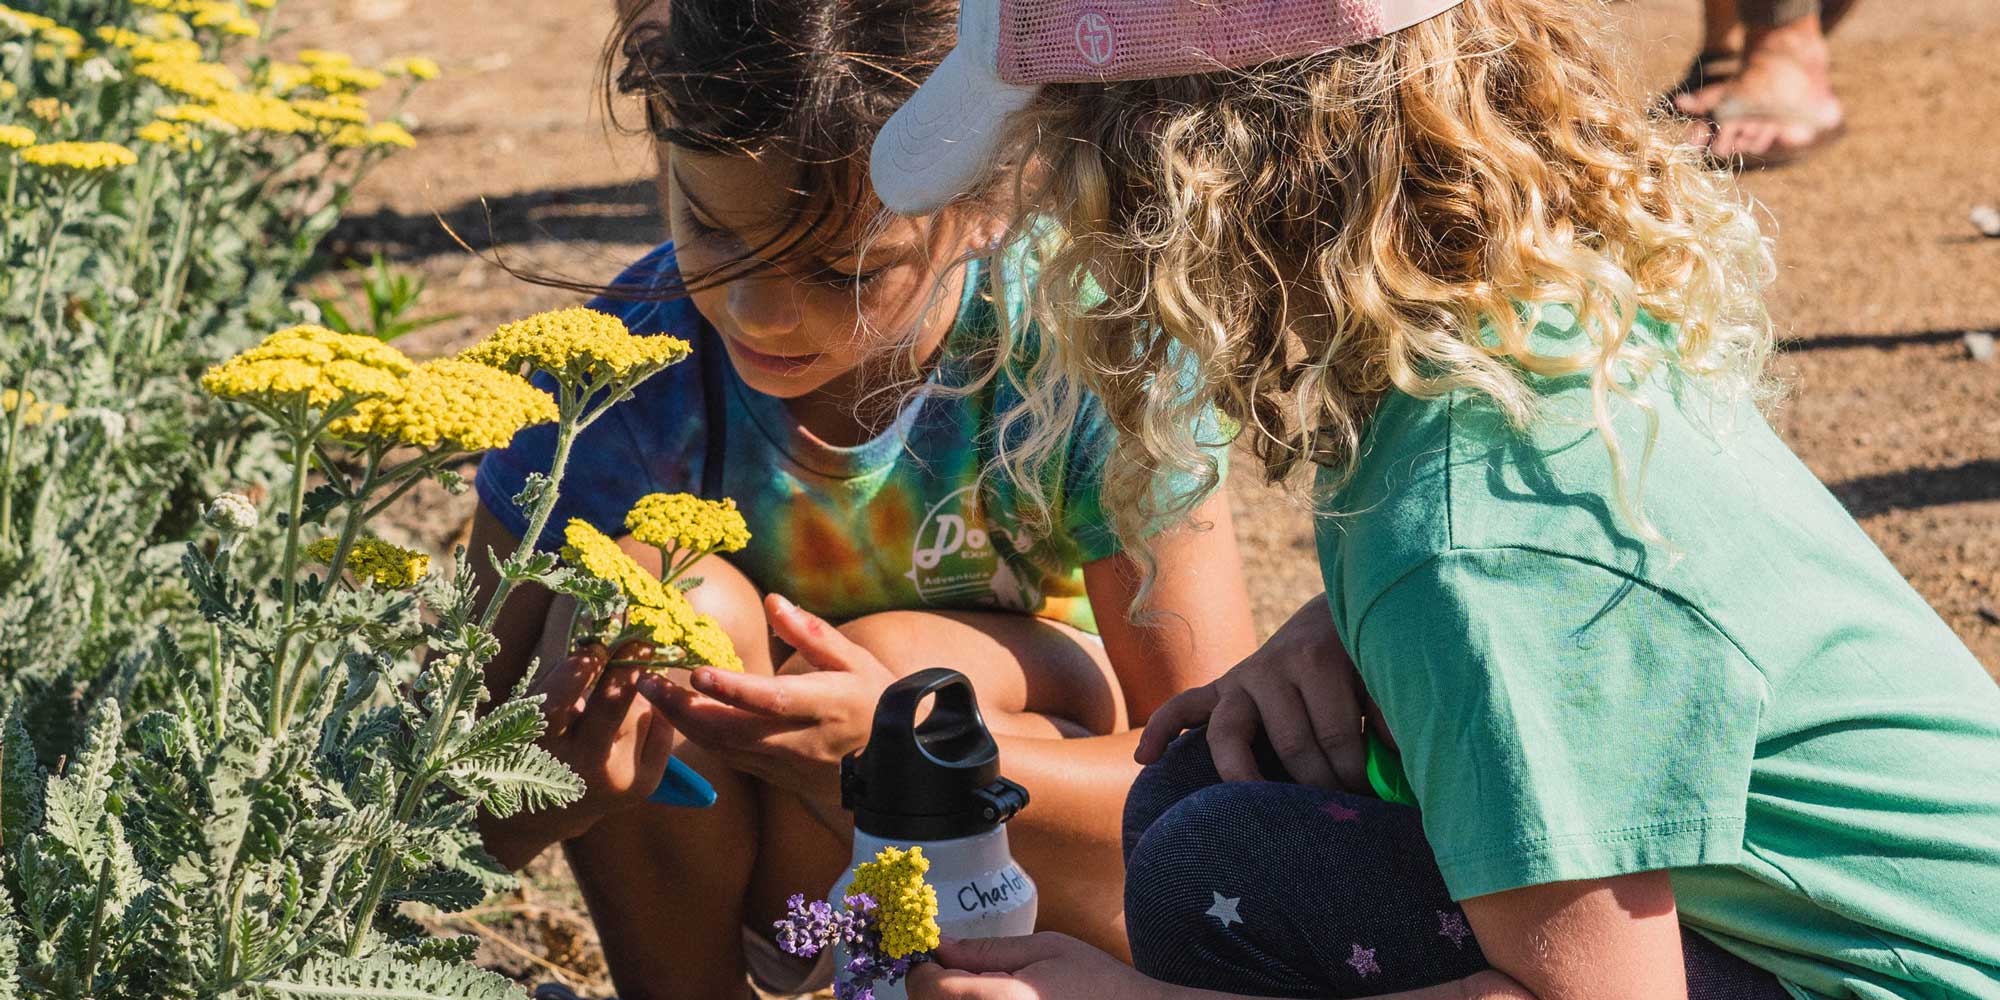 Two children examine flowers.